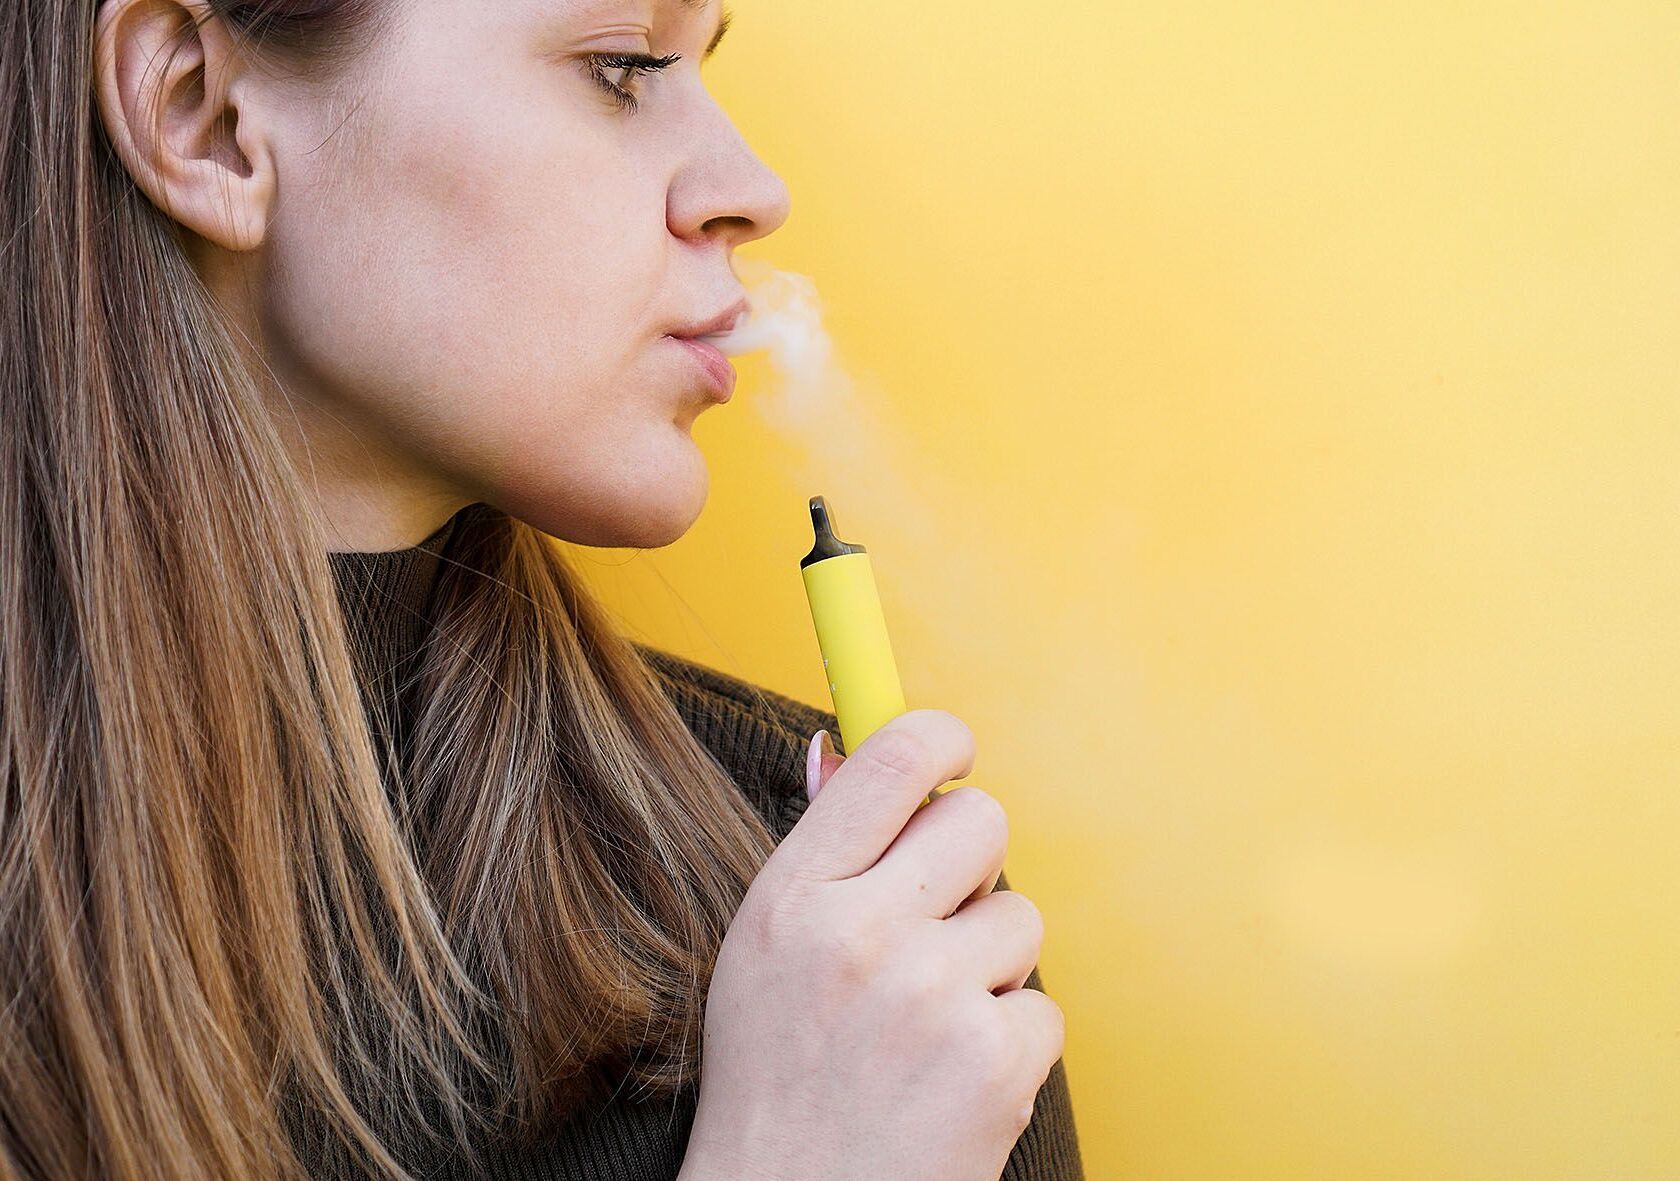 Junge Frau raucht e-Zigarette